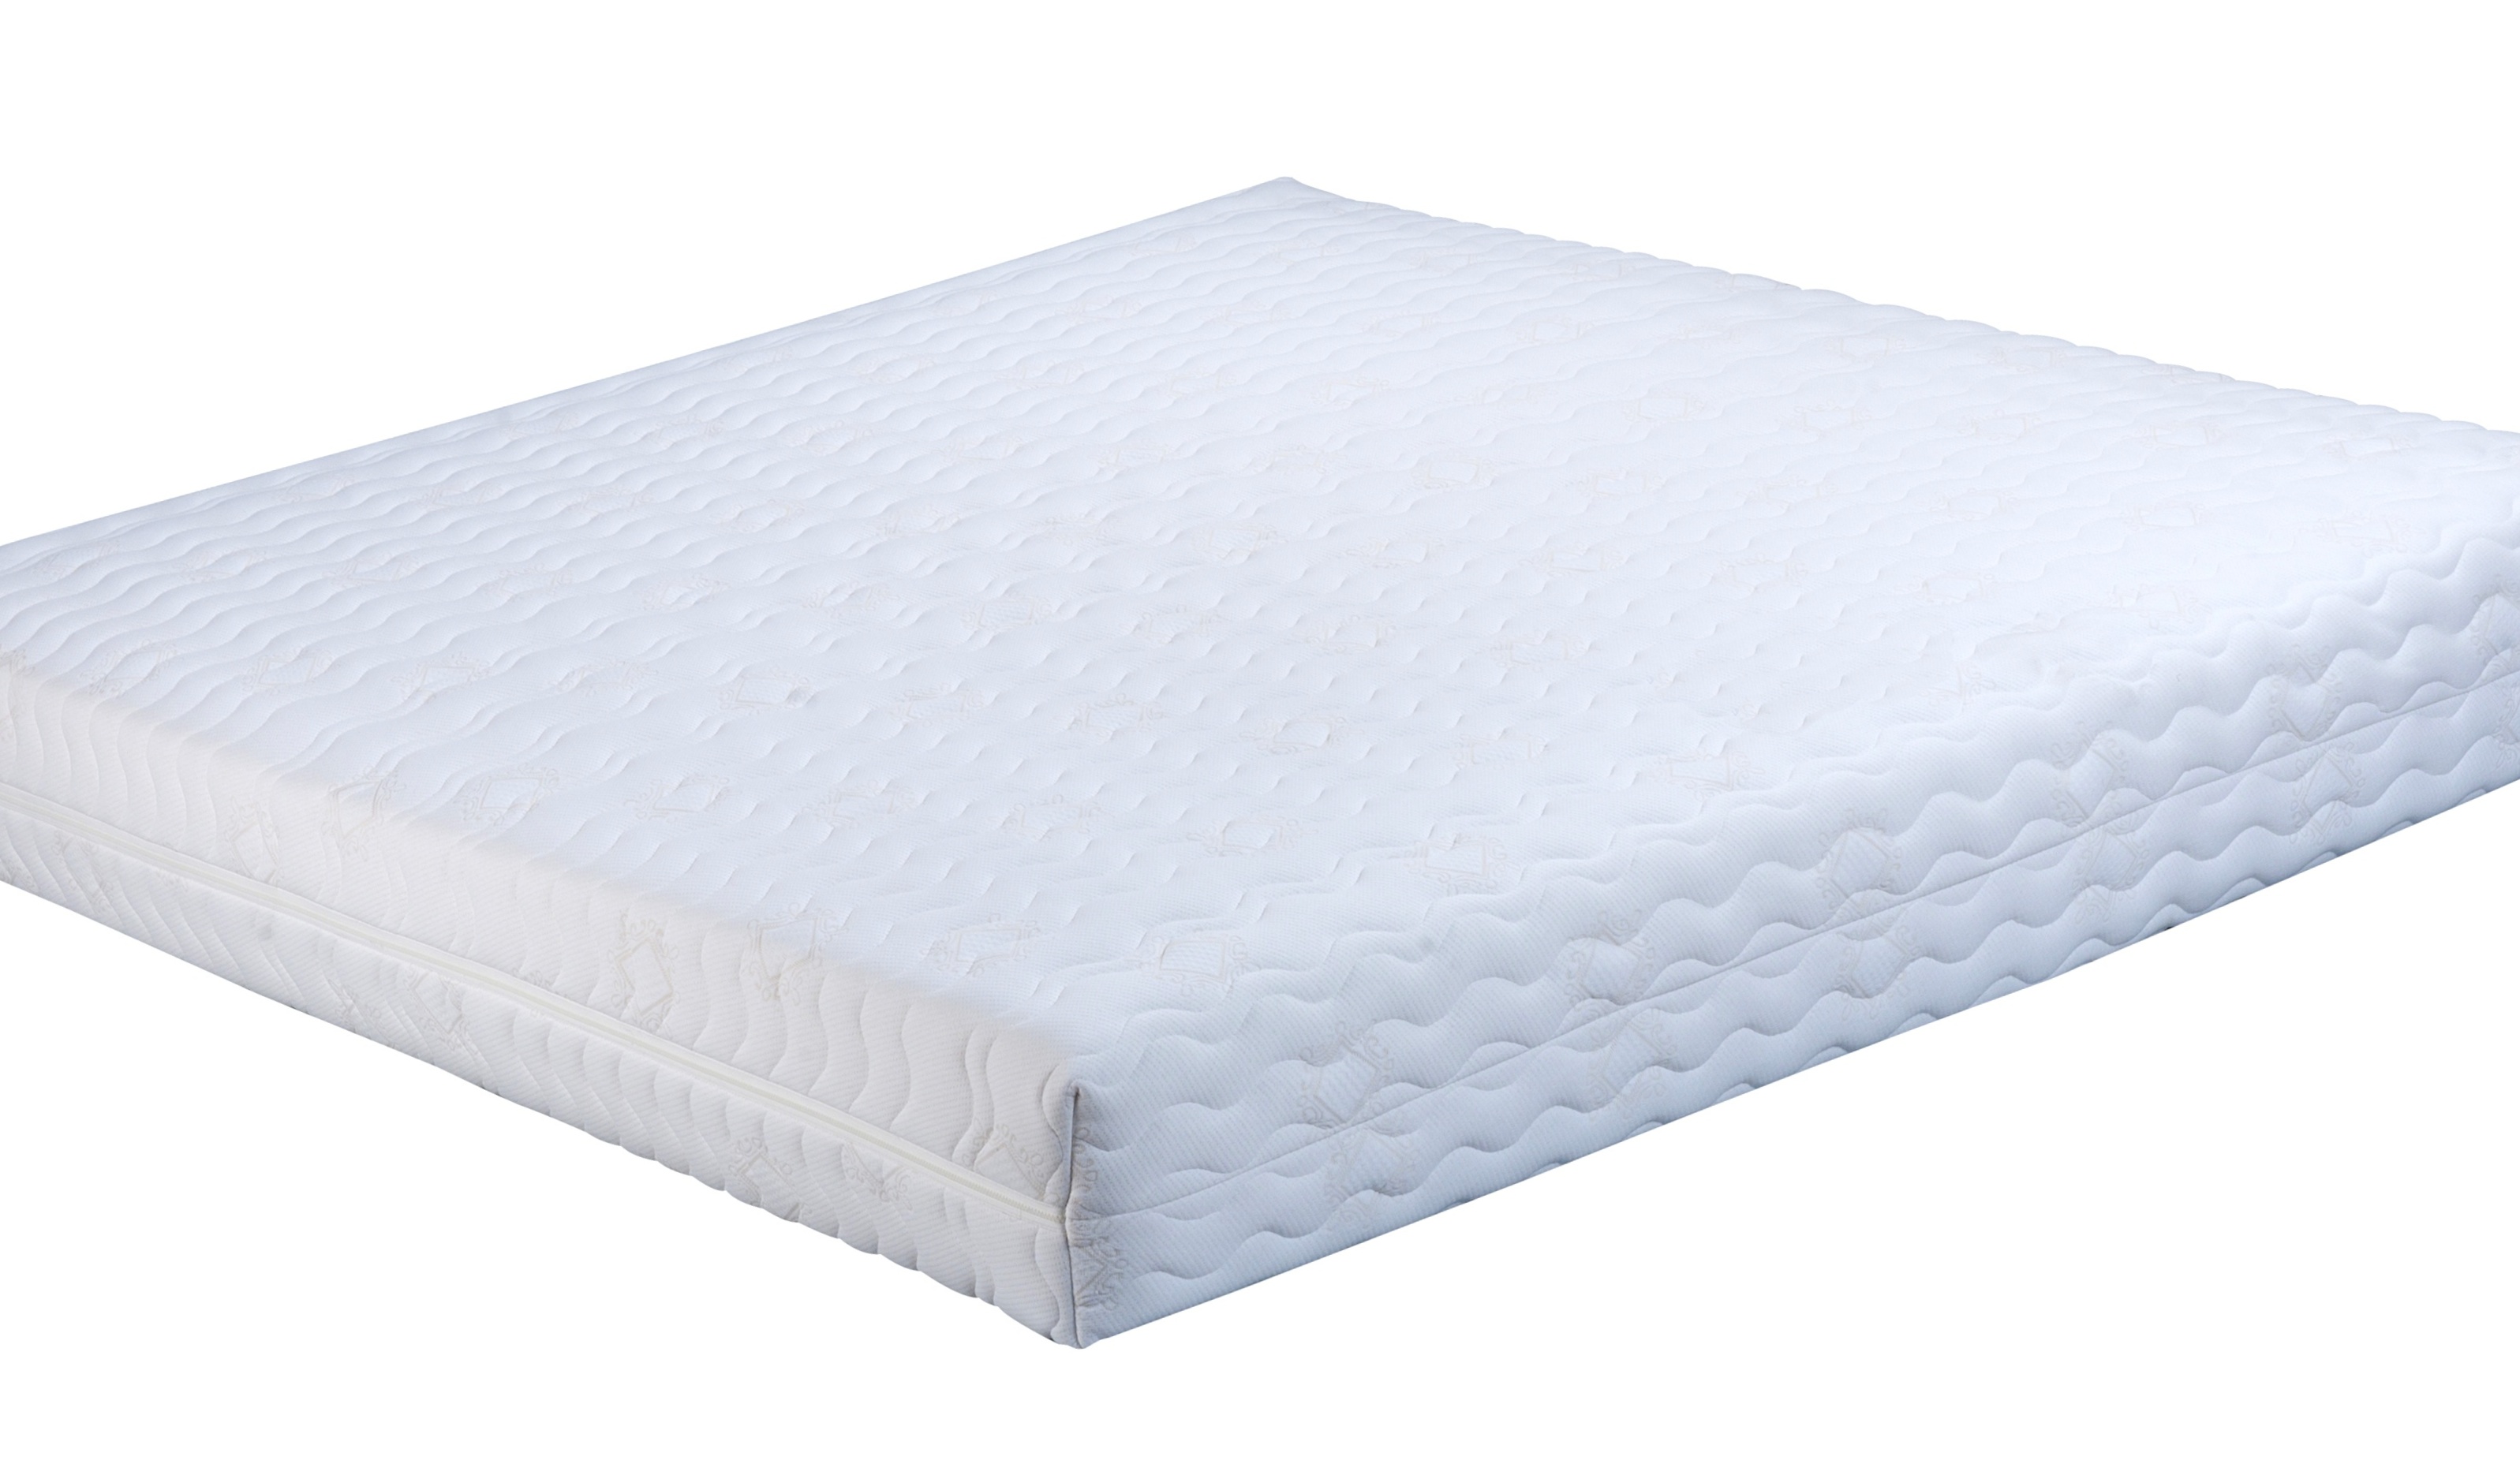 foam rubber mattress cover